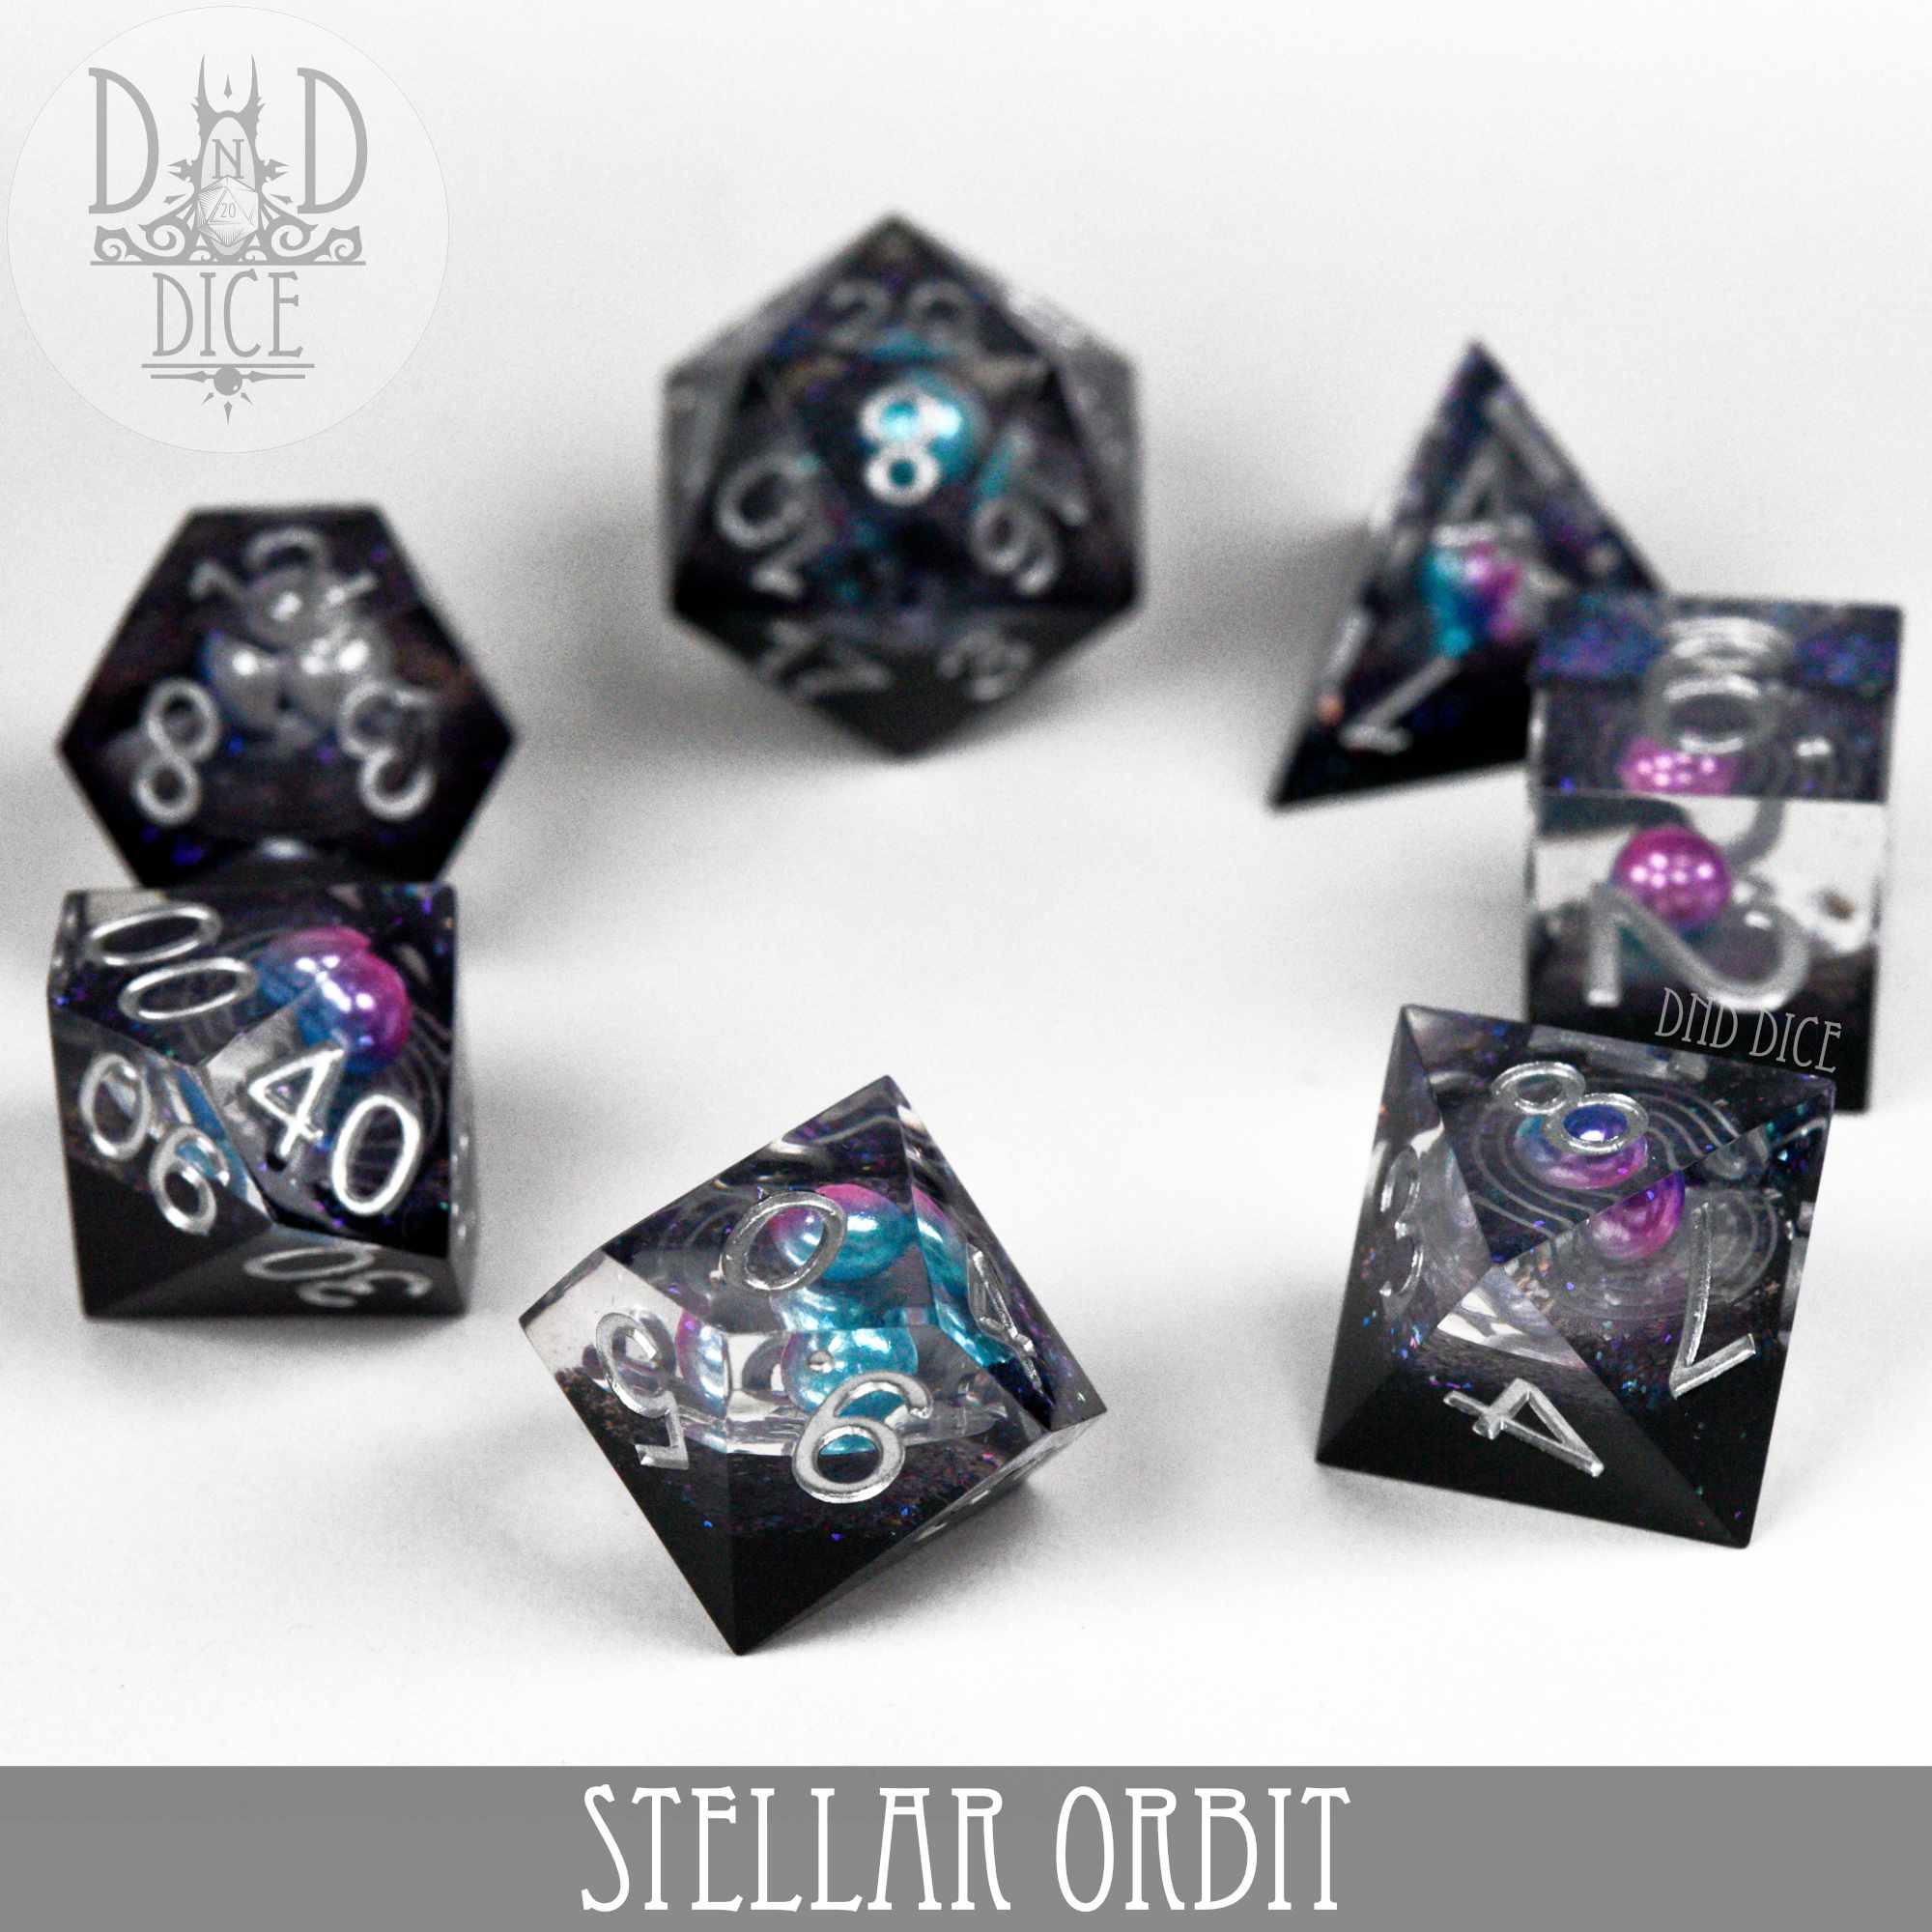 Stellar Orbit Handmade Dice Set